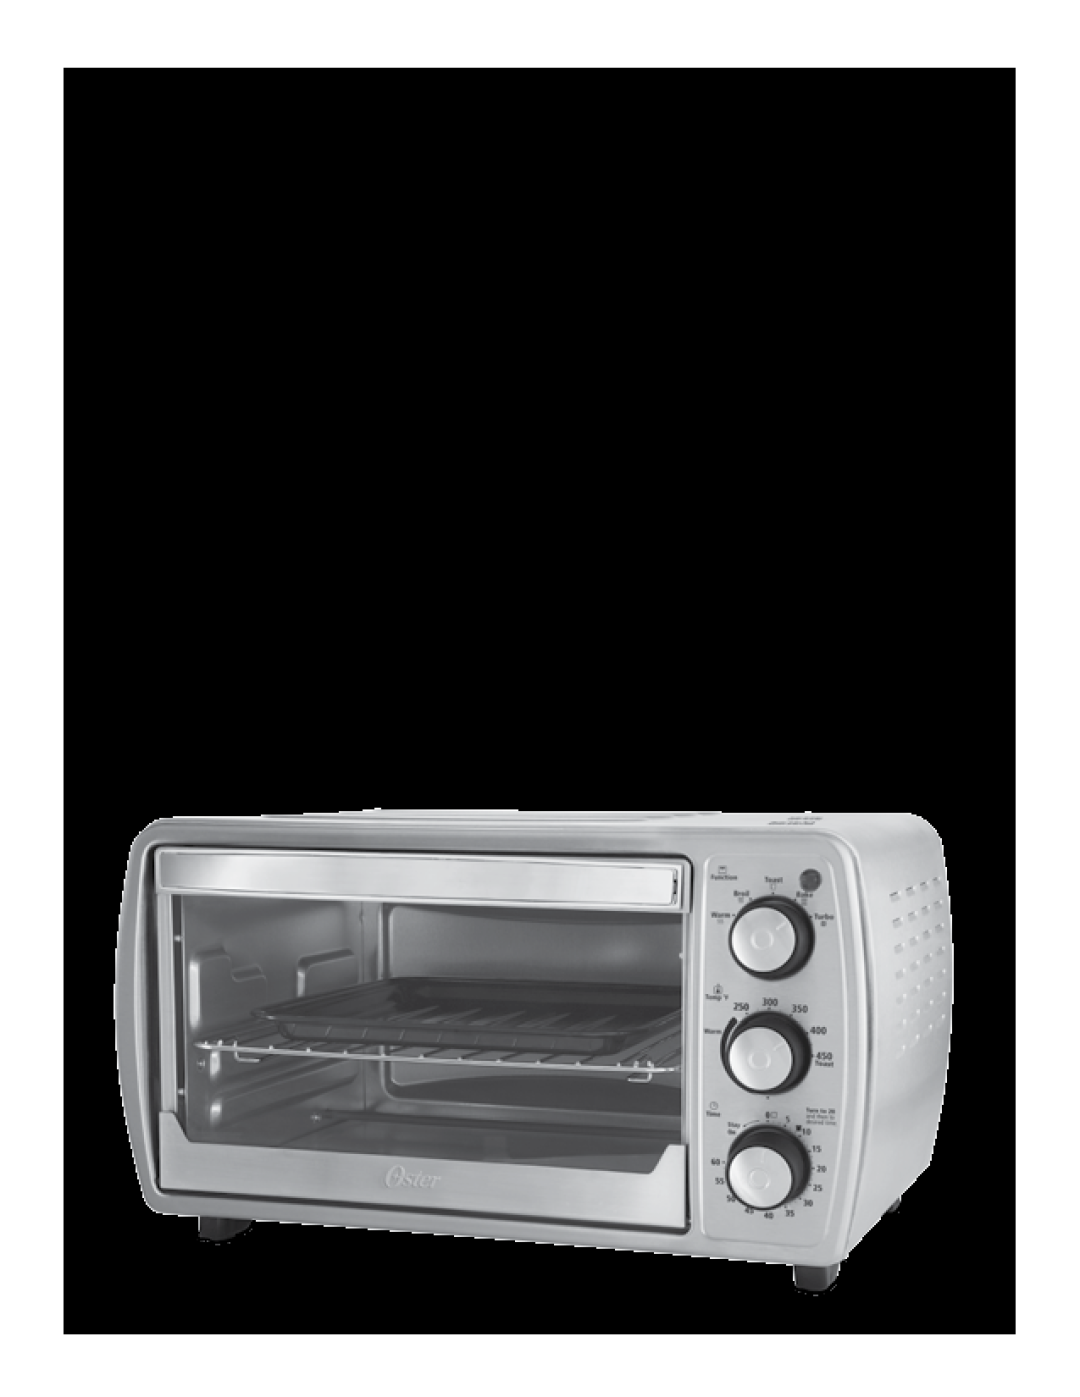 Oster tssttvcg02 user manual Countertop Oven, Horno para Mostrador, Manual de Instrucciones, MODEL/MODELO TSSTTVCG02, P.N 